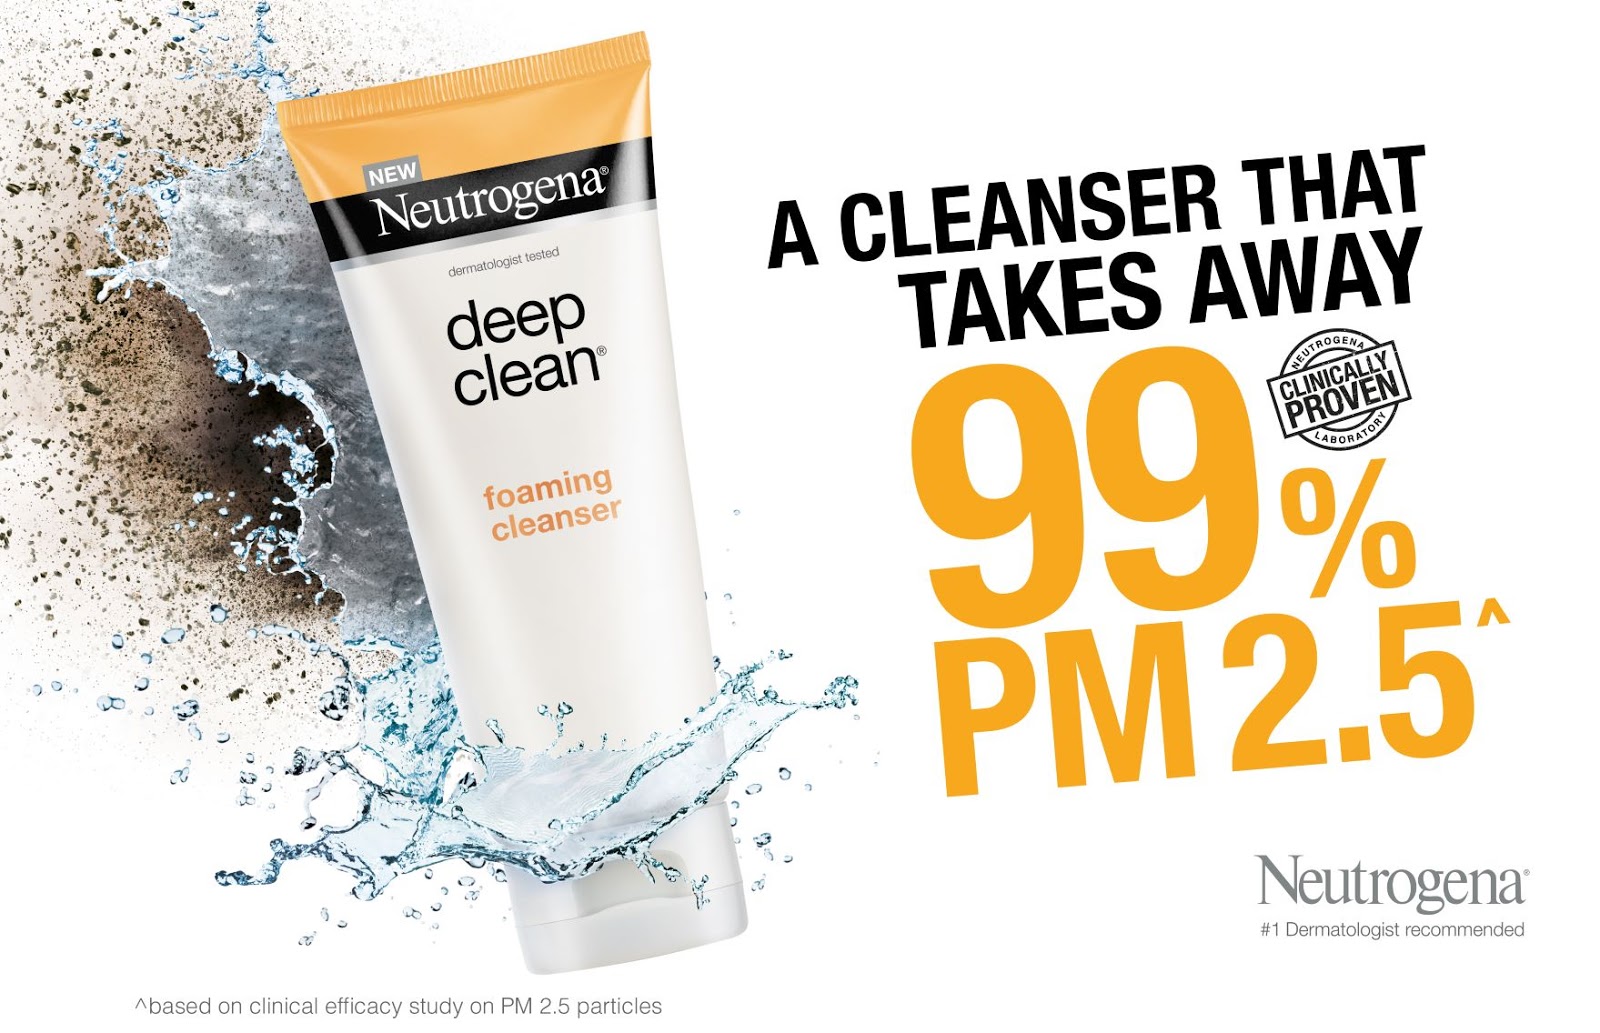 Neutrogena Foam Cleanser. Neutrogena Foaming Cleanser. Deep clean.